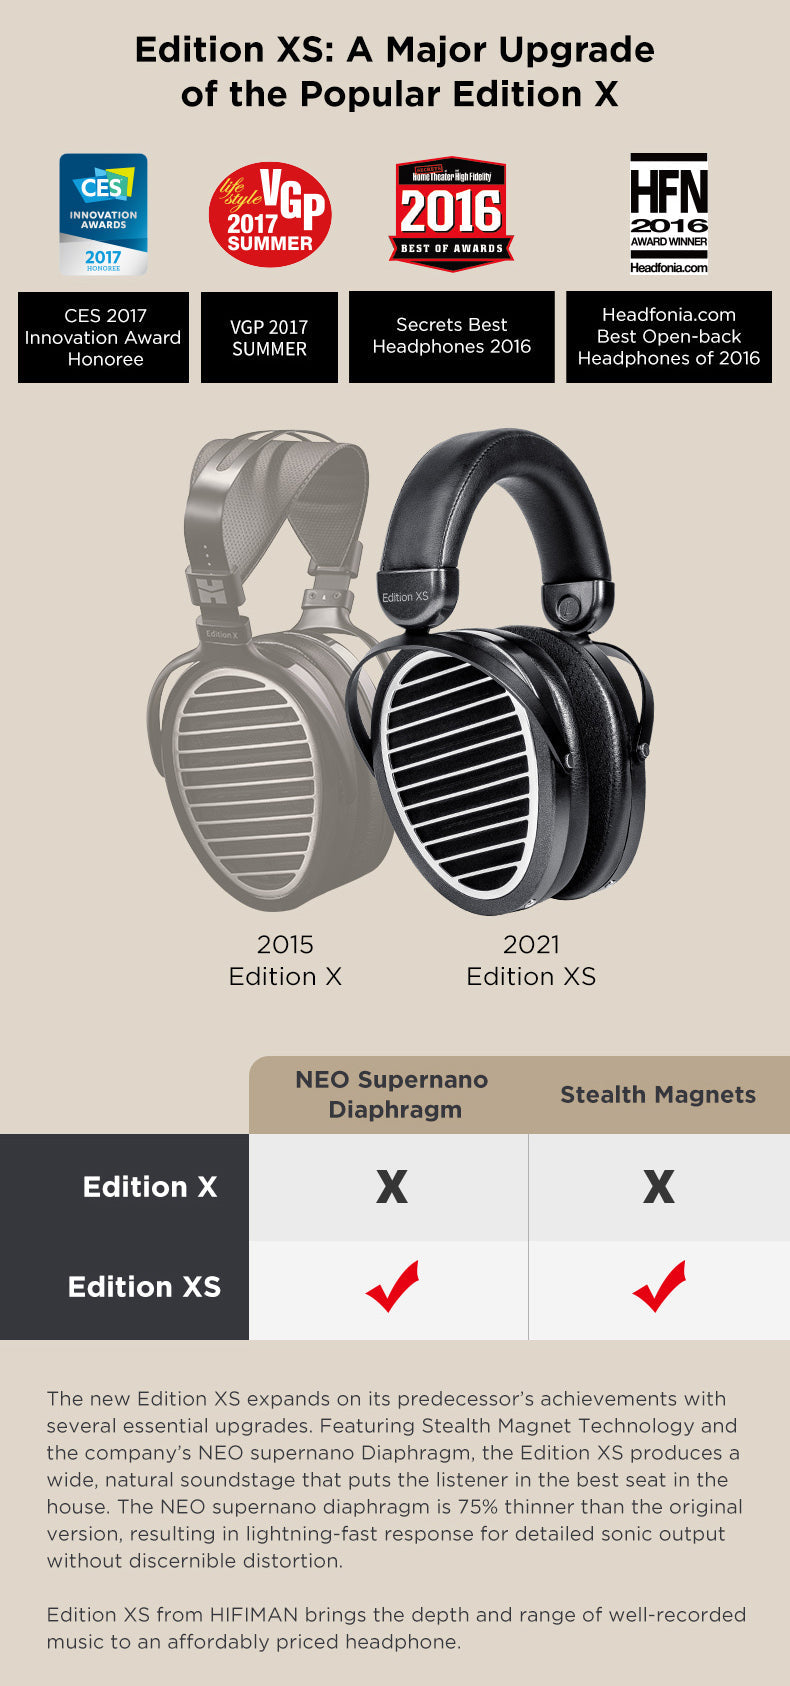 Apos Audio HIFIMAN Headphone HIFIMAN Edition XS Planar Magnetic Headphone